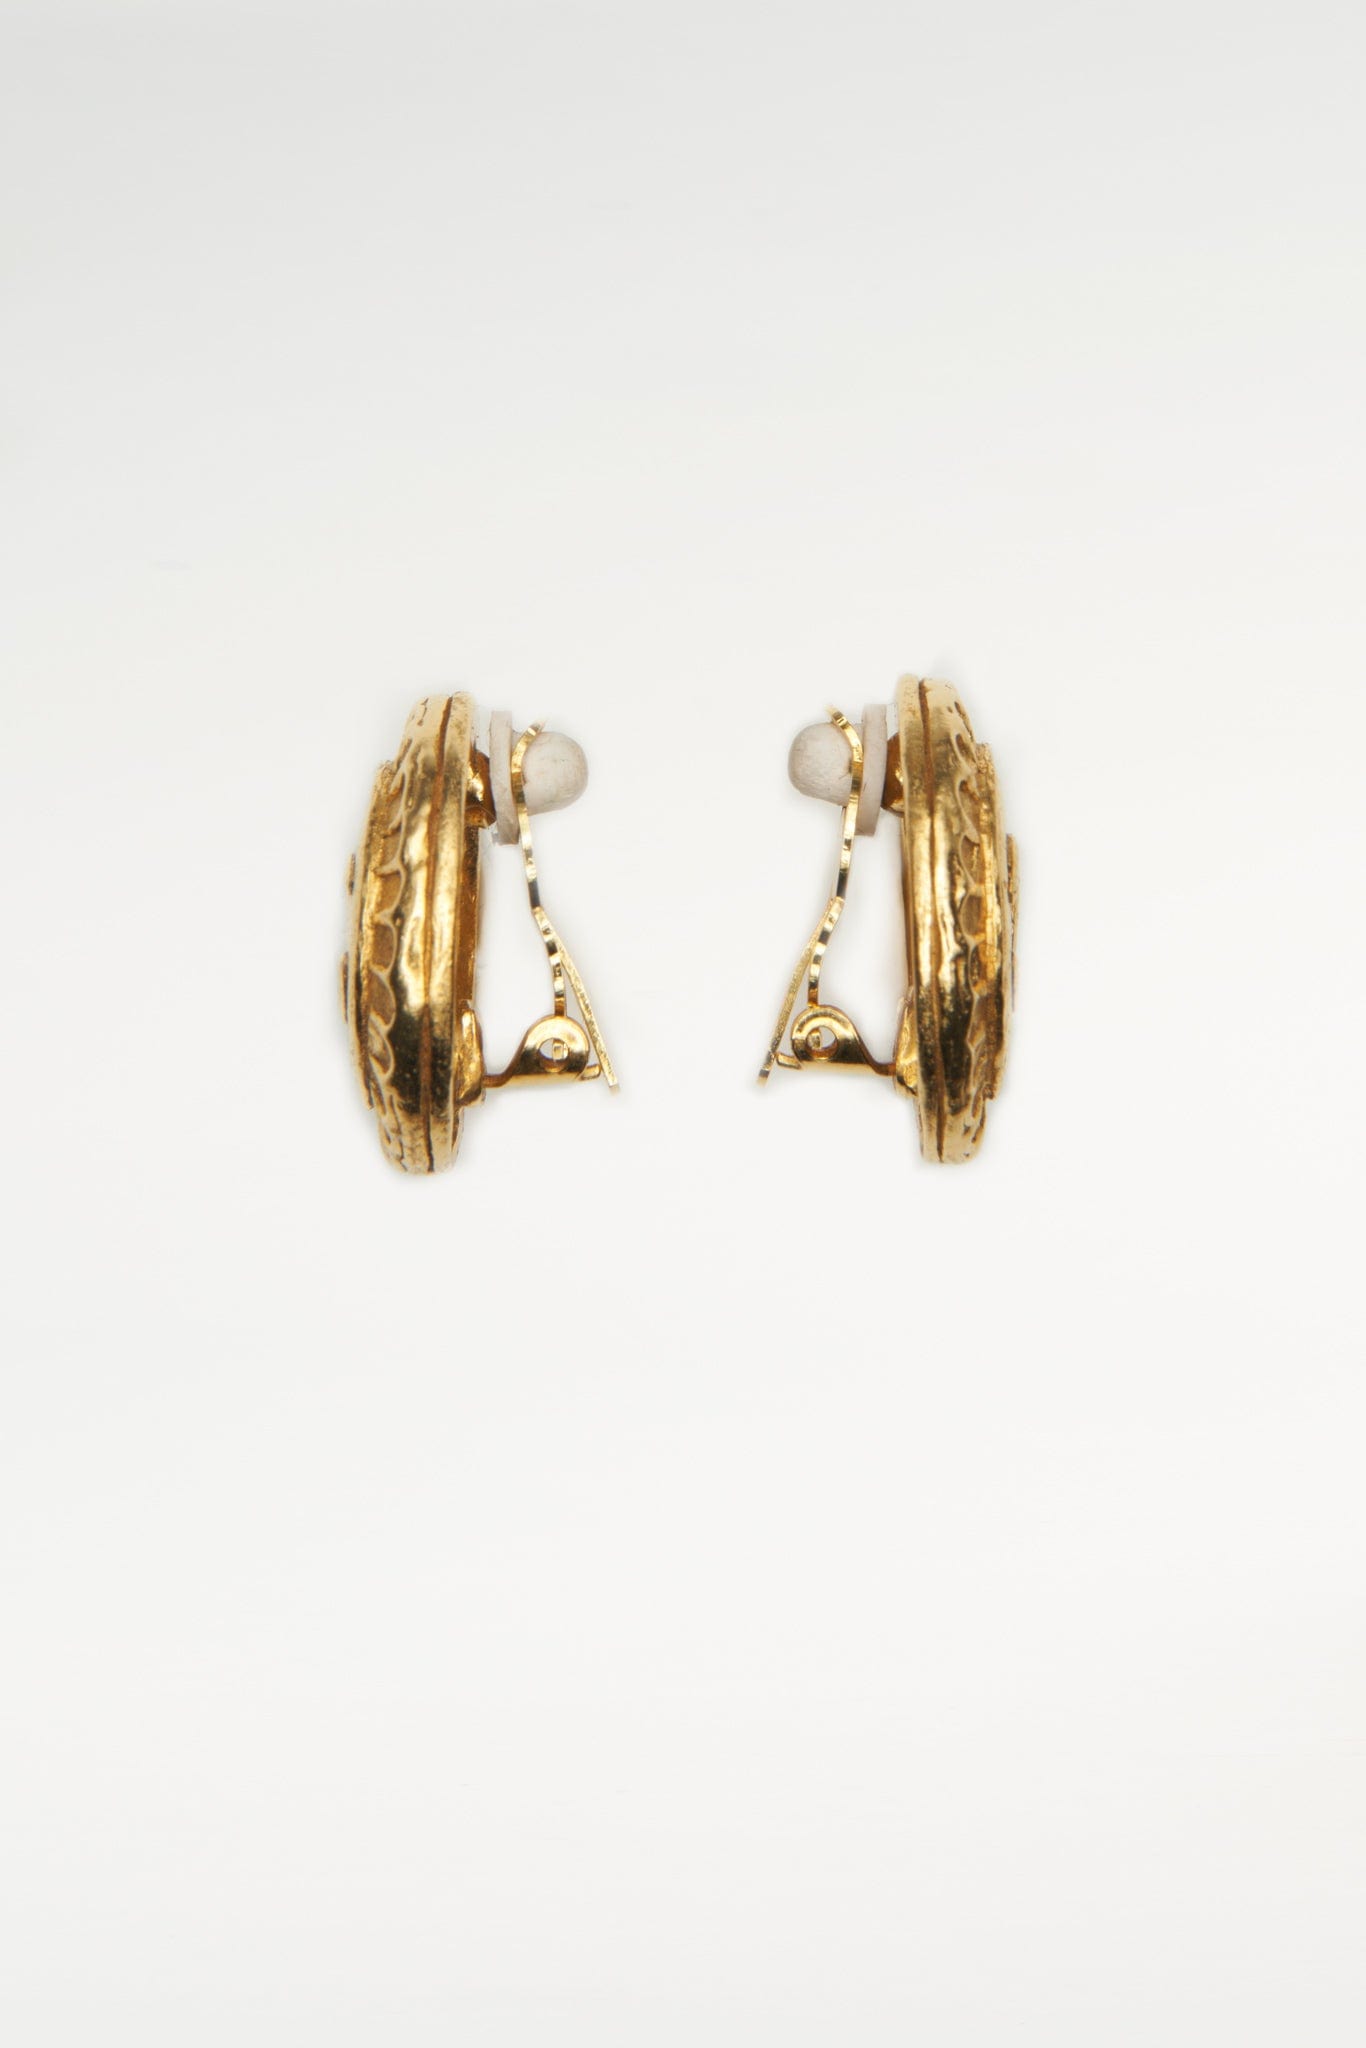 Vintage Chanel 18k Gold Gems Huggie Earrings